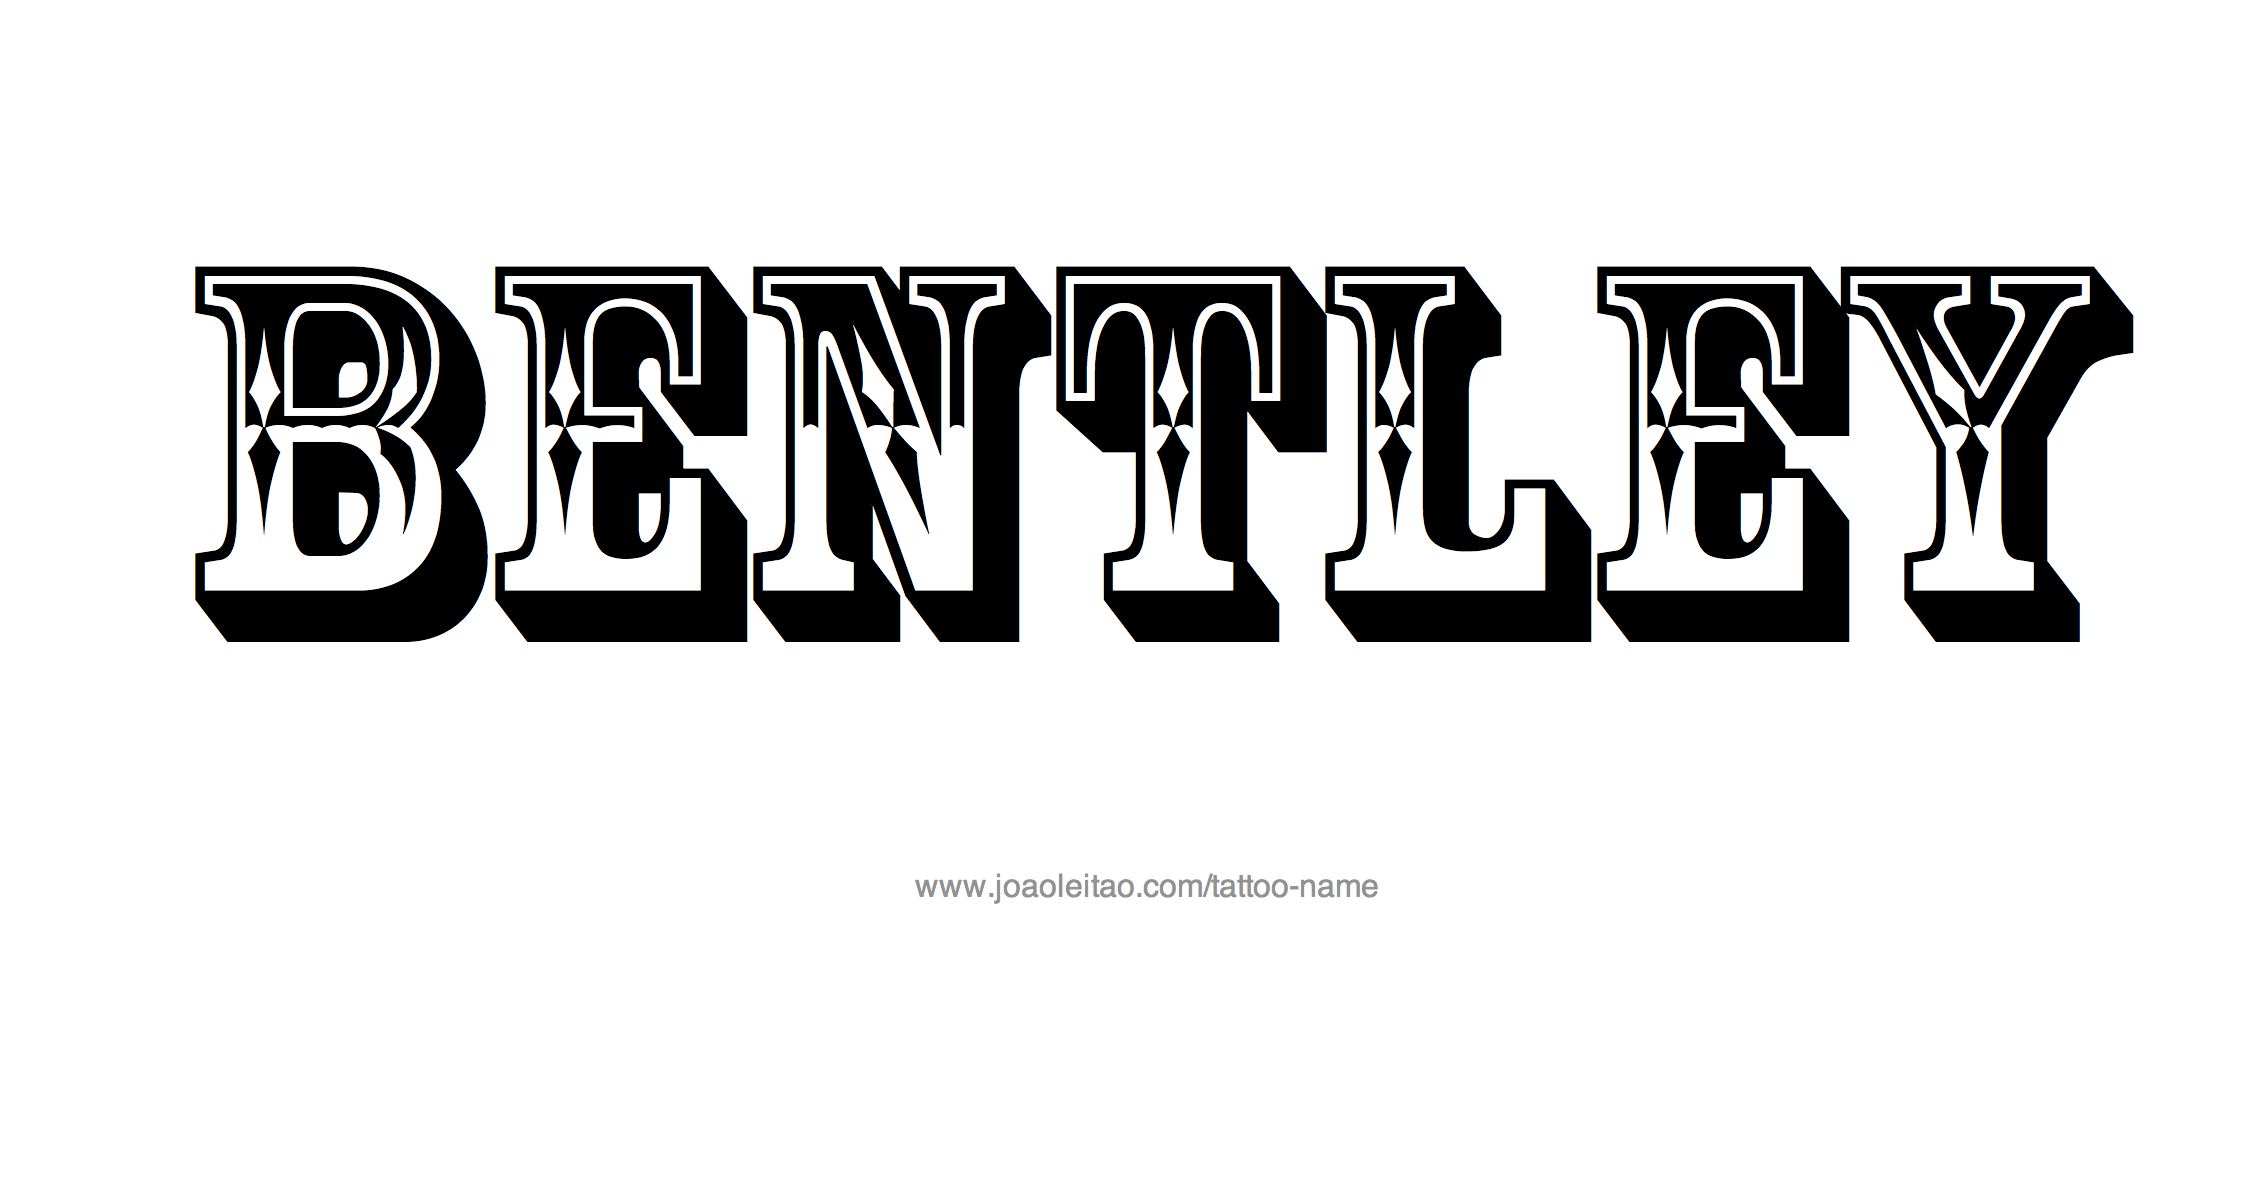 Tattoo Design Name Bentley